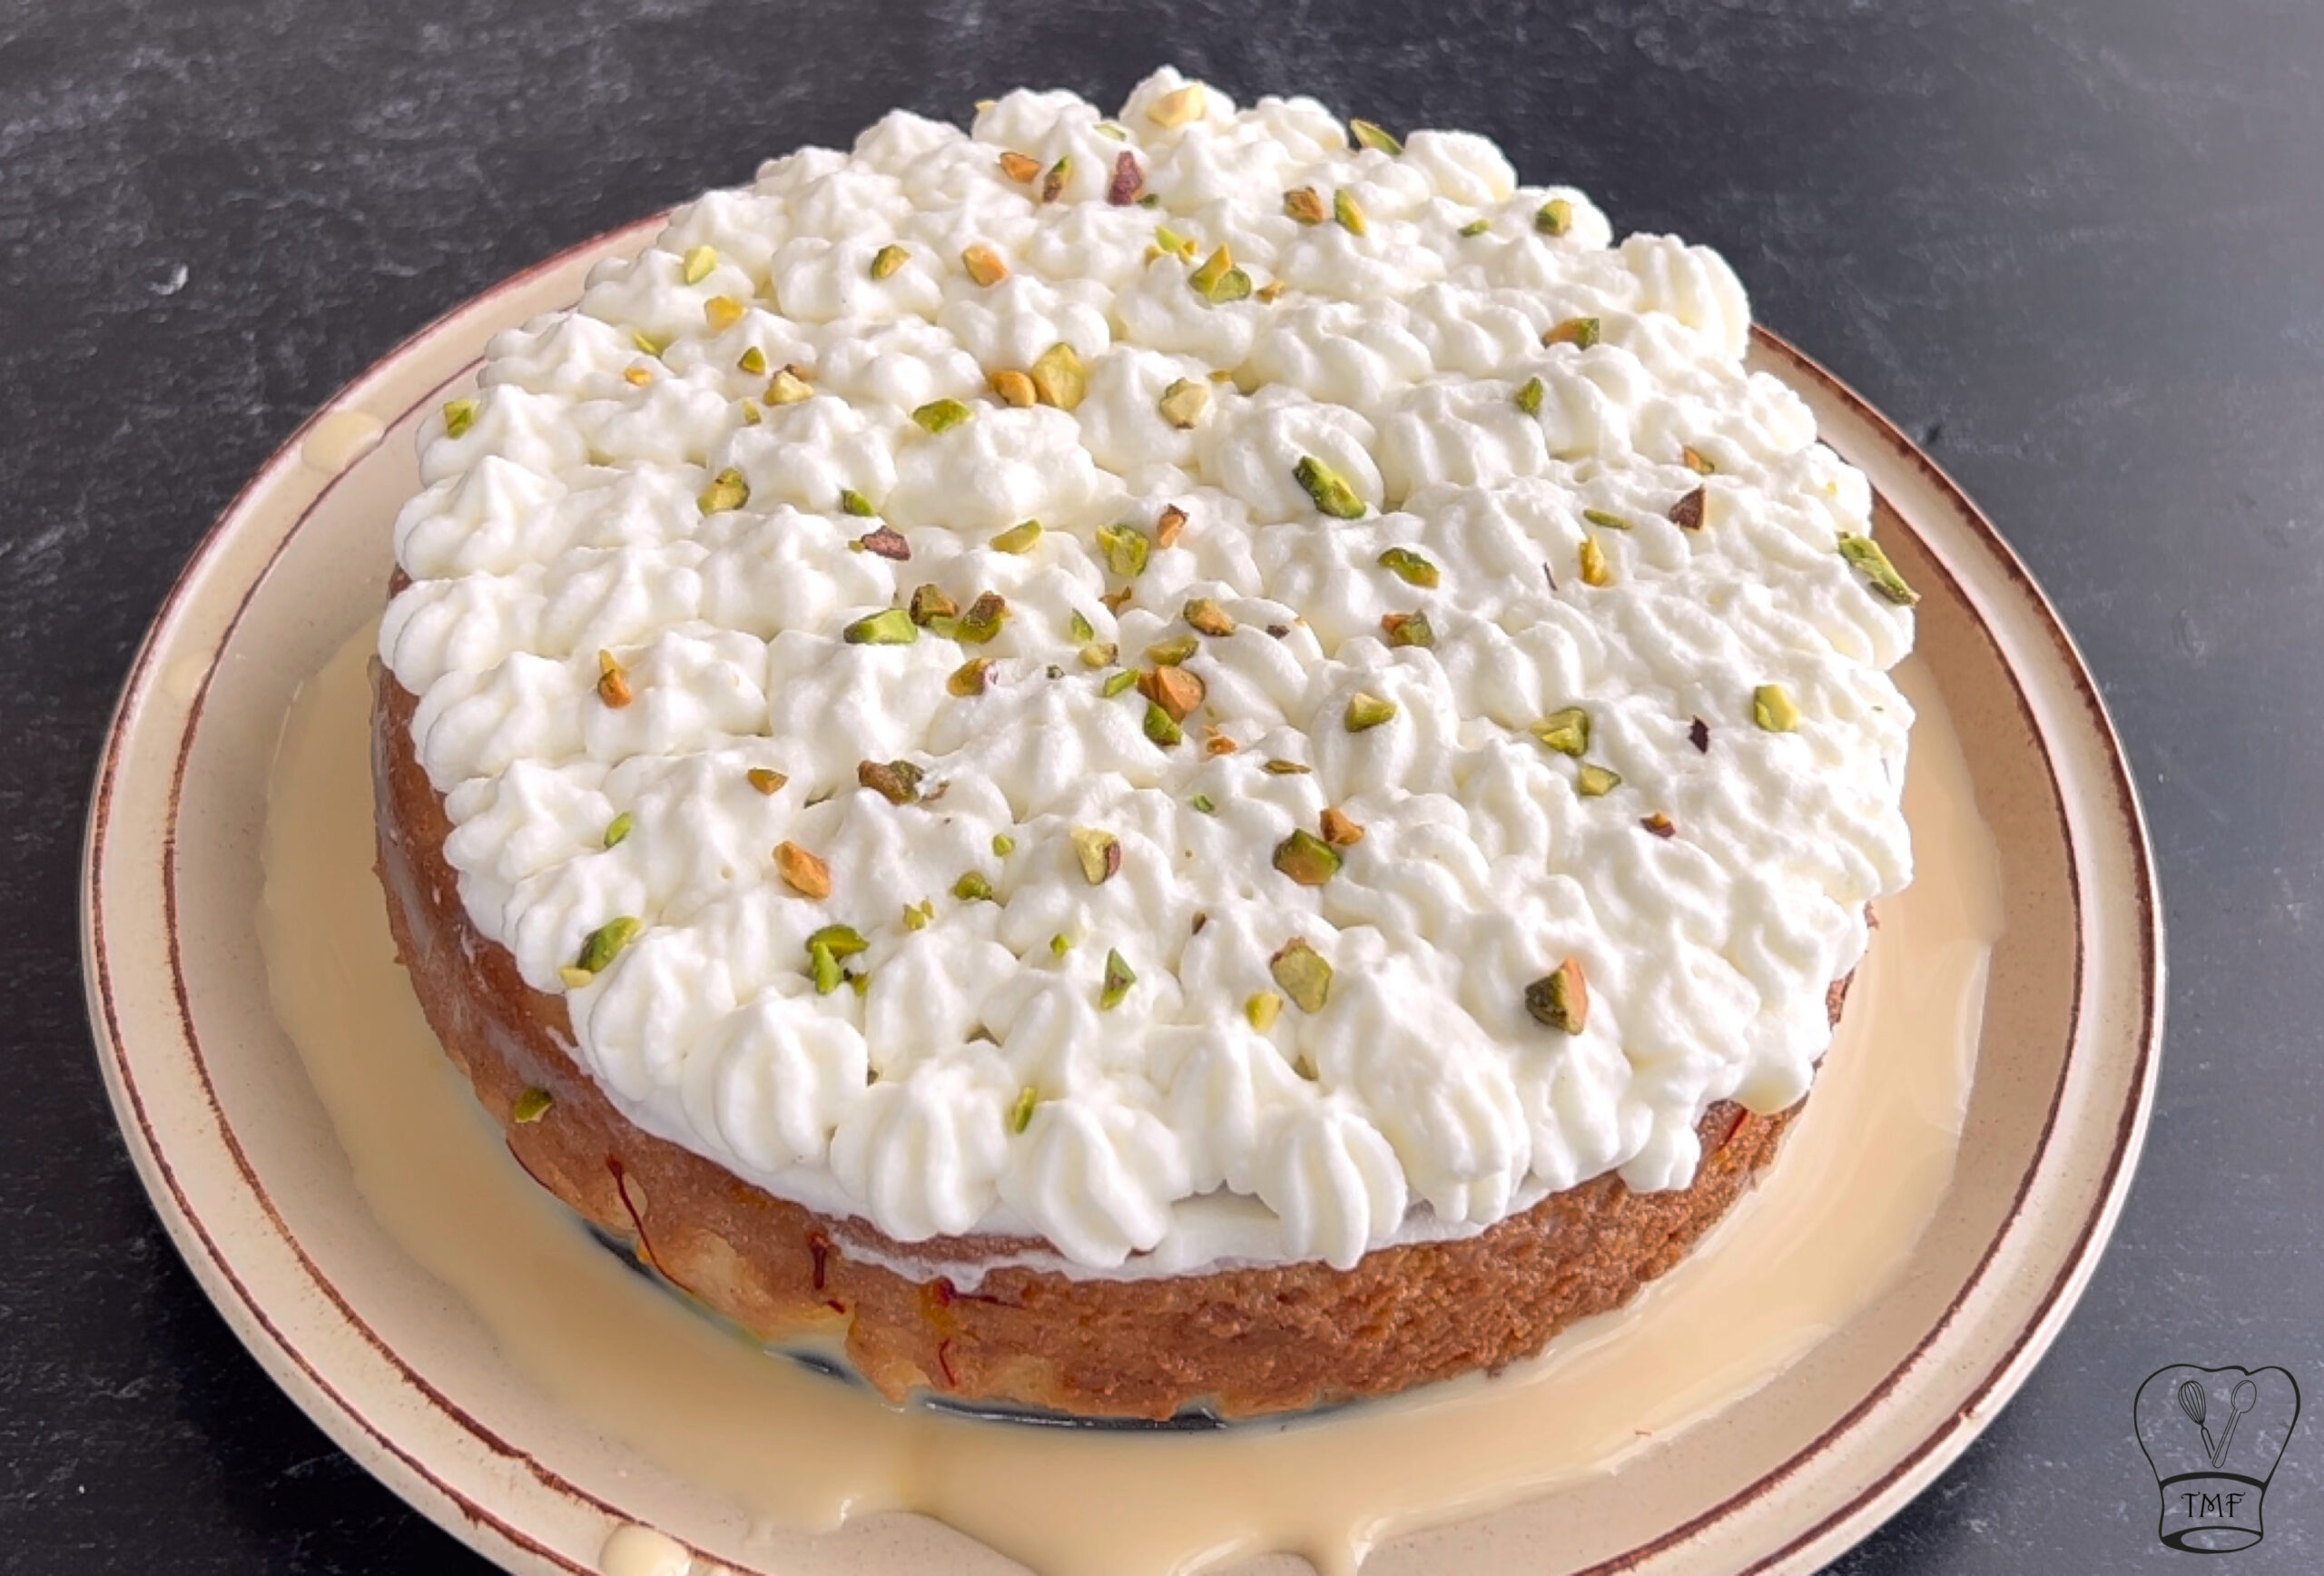 Amrutham Podi Easy Cake Recipe In Malayalam|അമൃതം പൊടി വെച്ചൊരു സിംപിൾ പീസ്  കേക്ക് ഉണ്ടാക്കിയാലോ... - YouTube